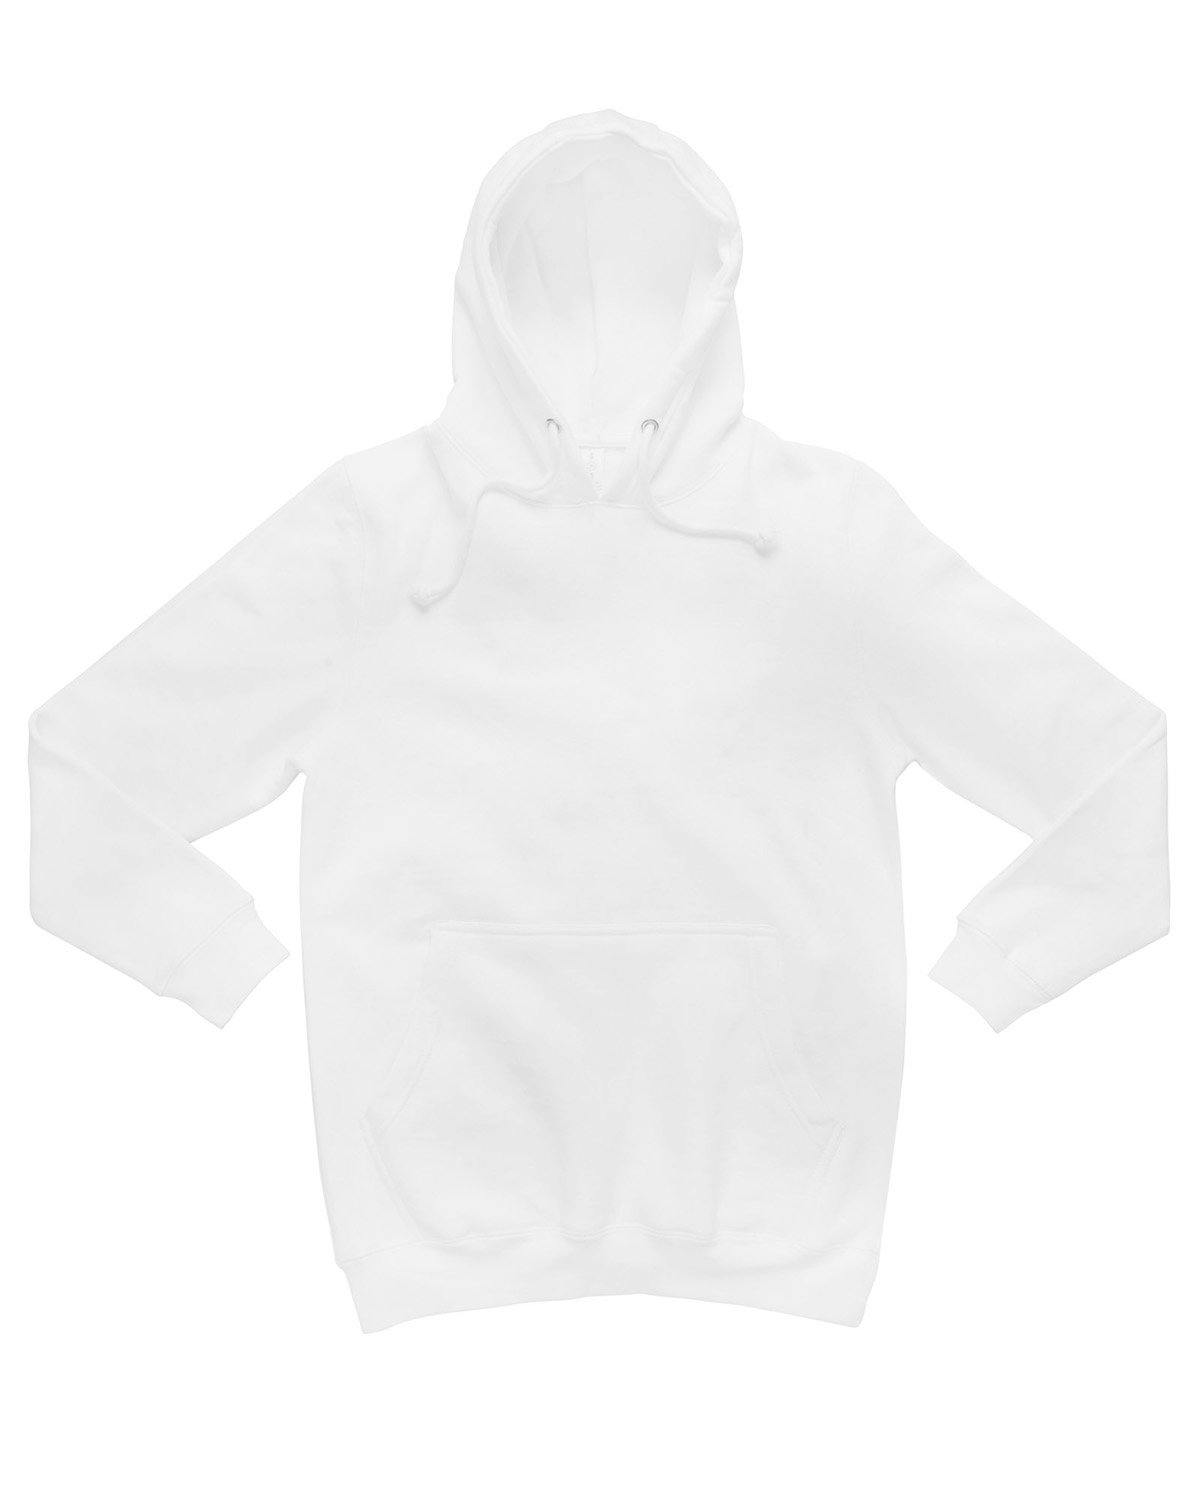 Image for Unisex Heavyweight Pullover Hooded Sweatshirt